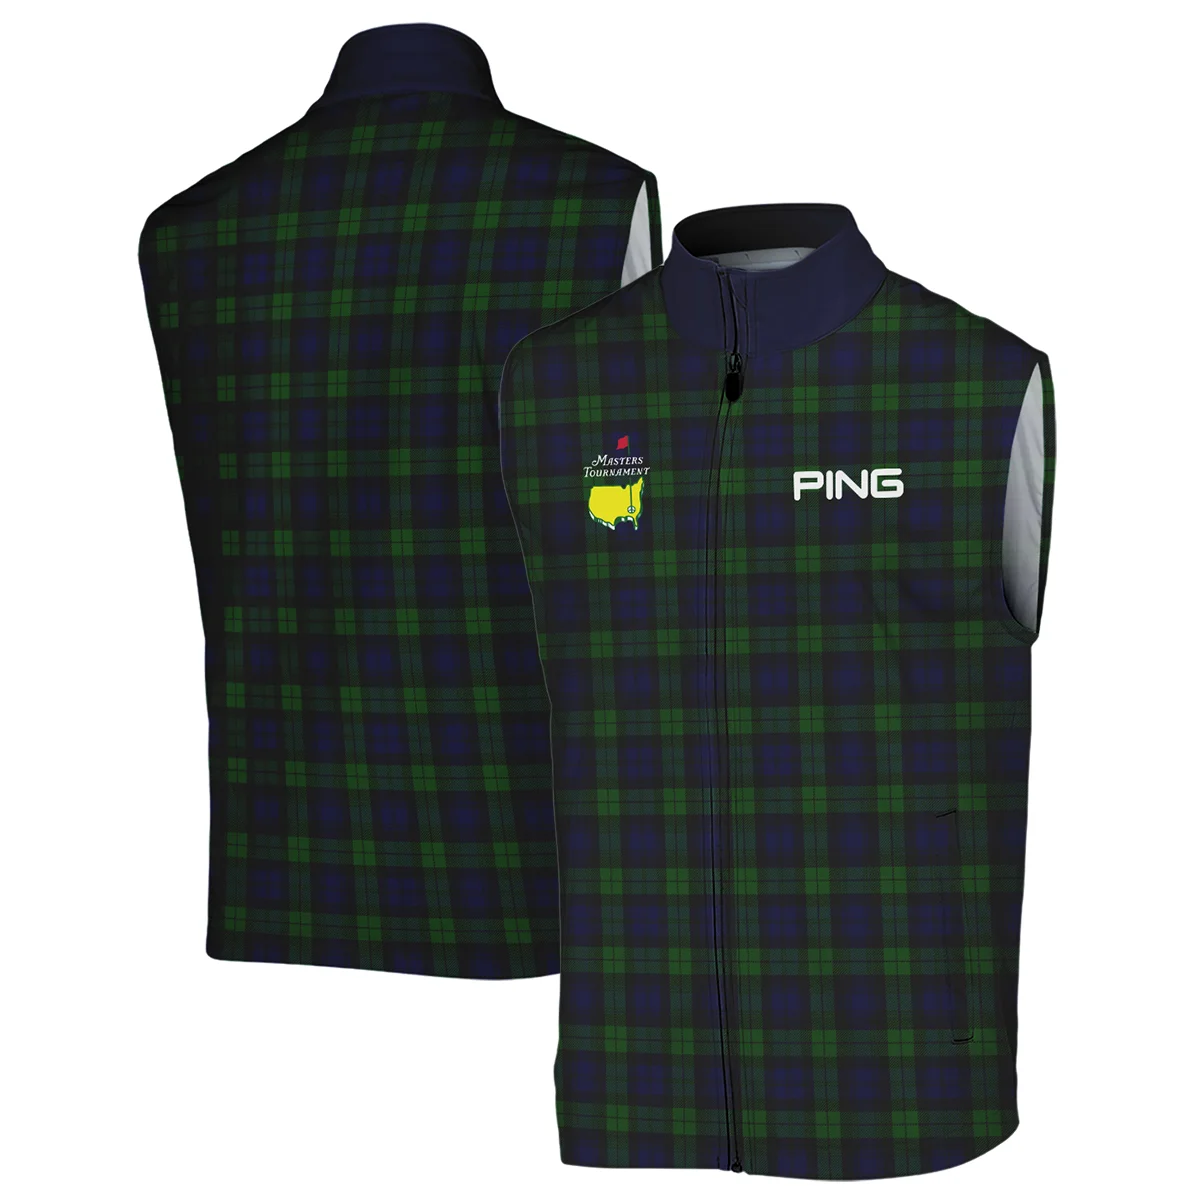 Masters Tournament Ping Golf Sleeveless Jacket Sports Green Purple Black Watch Tartan Plaid All Over Print Sleeveless Jacket